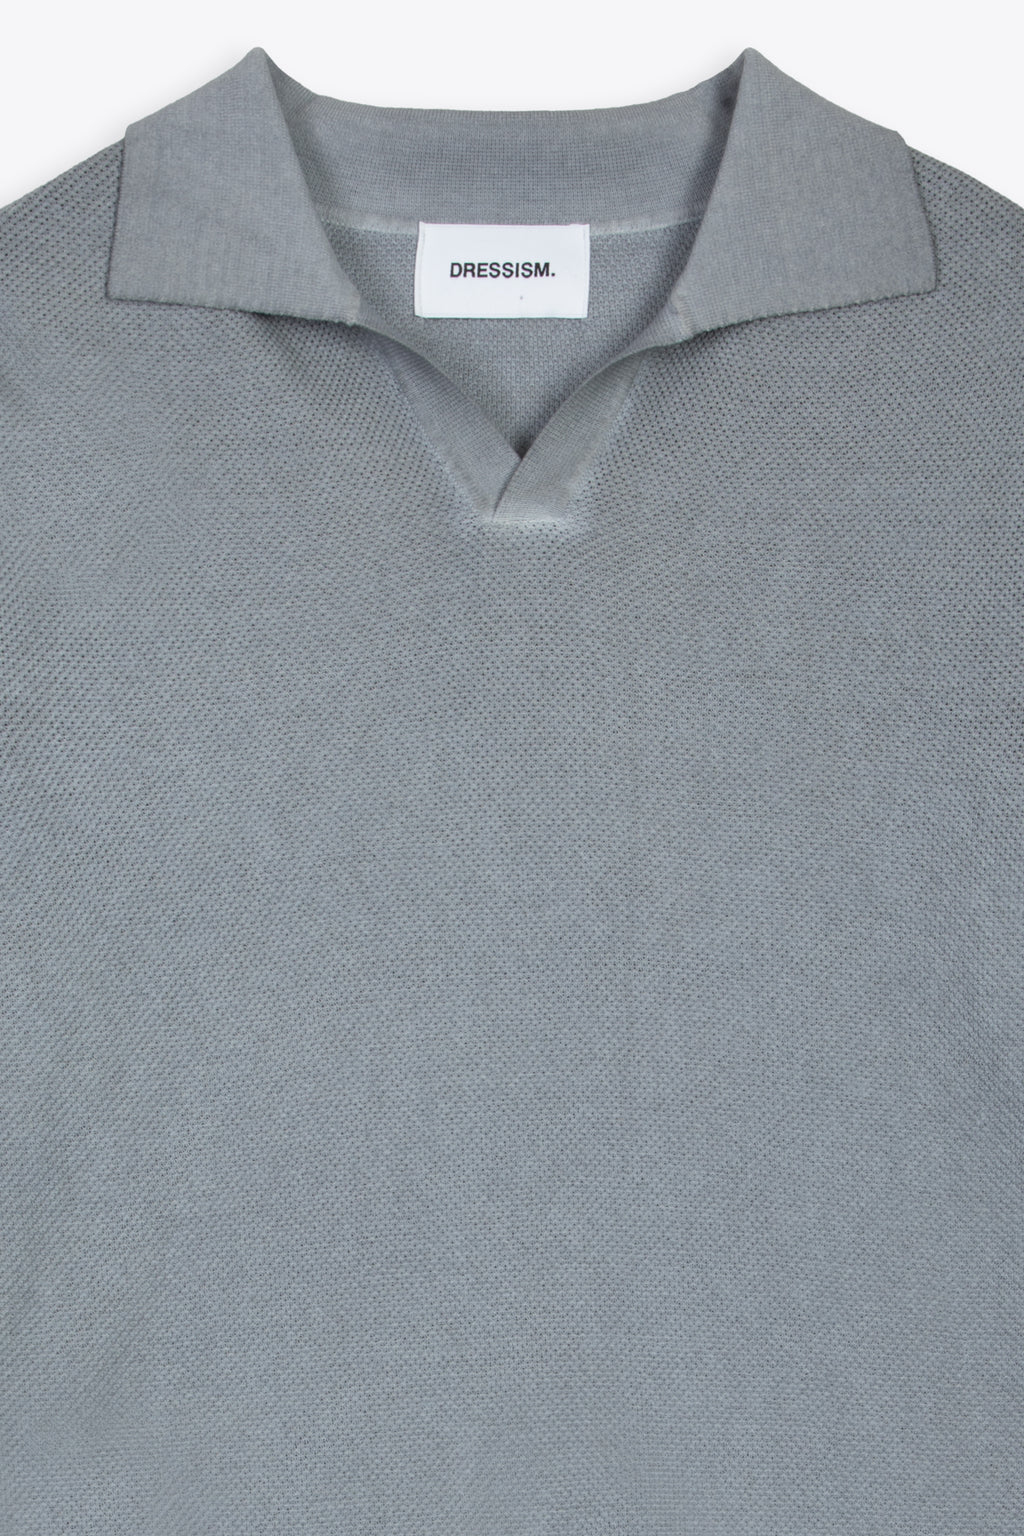 alt-image__Grey-moss-stitch-knitted-cotton-polo-shirt